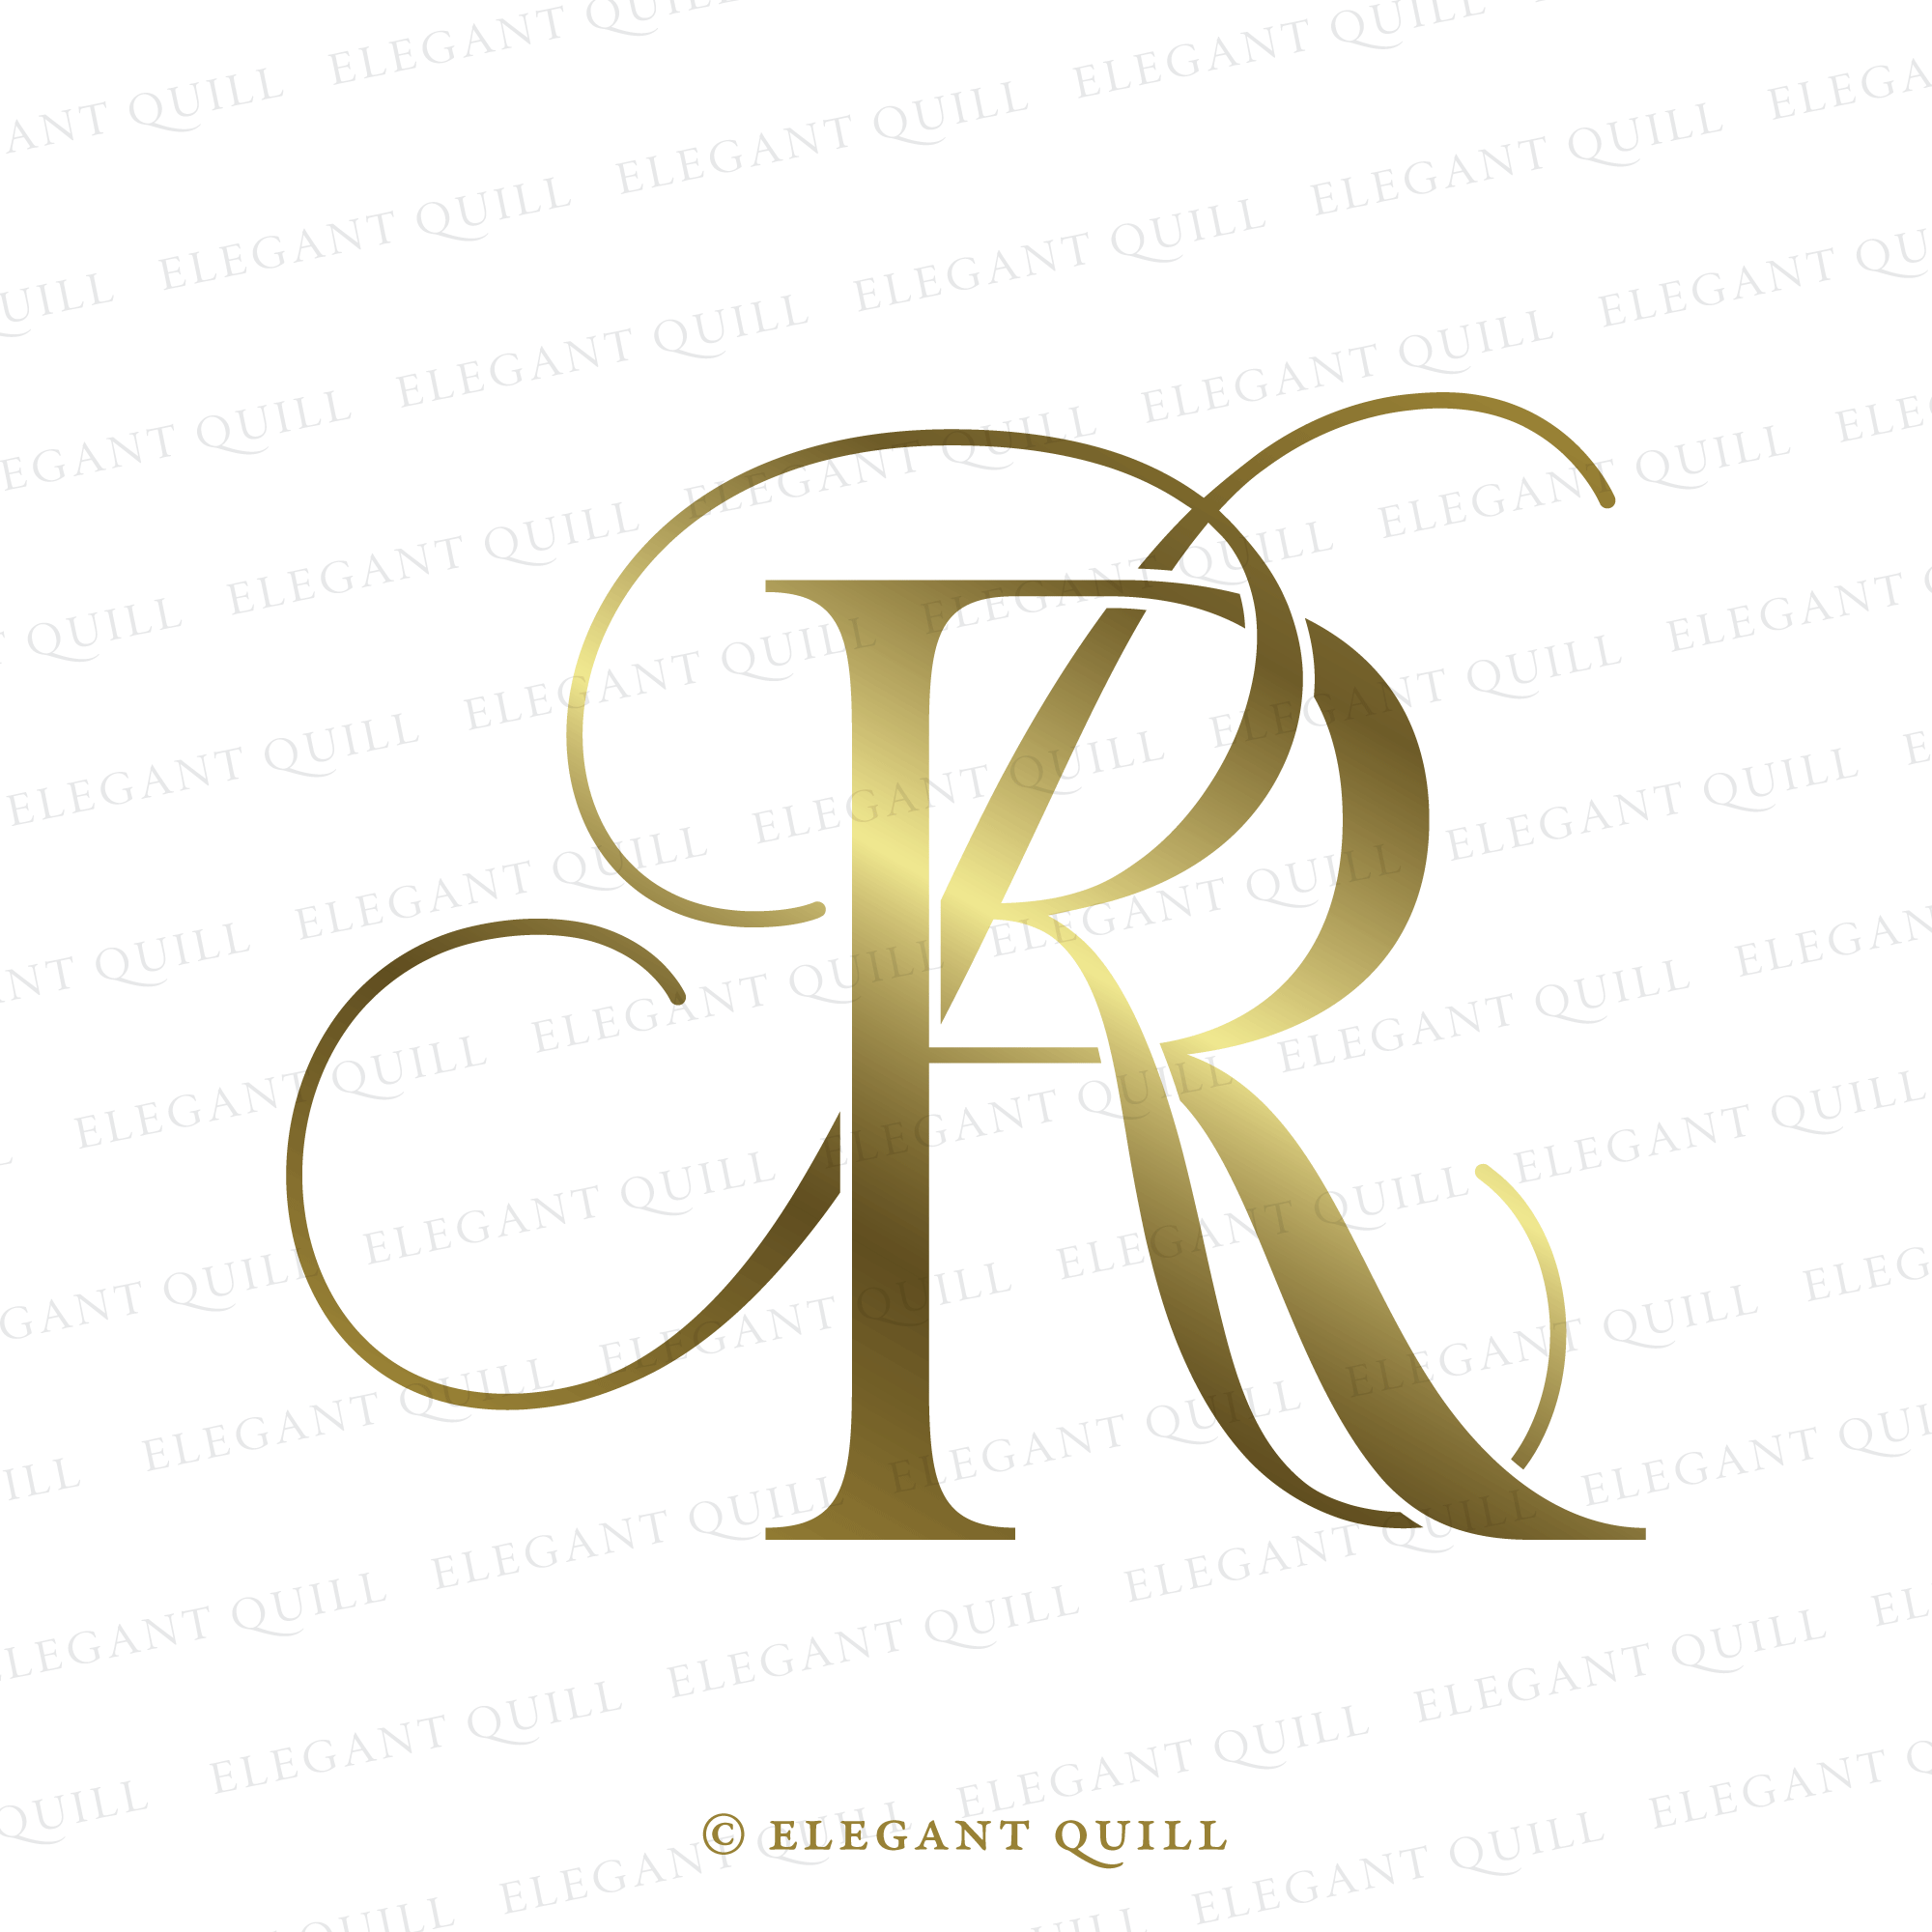 ir i r gold golden luxury product metal metallic alphabet company letter  logo design vector icon template green background:: tasmeemME.com